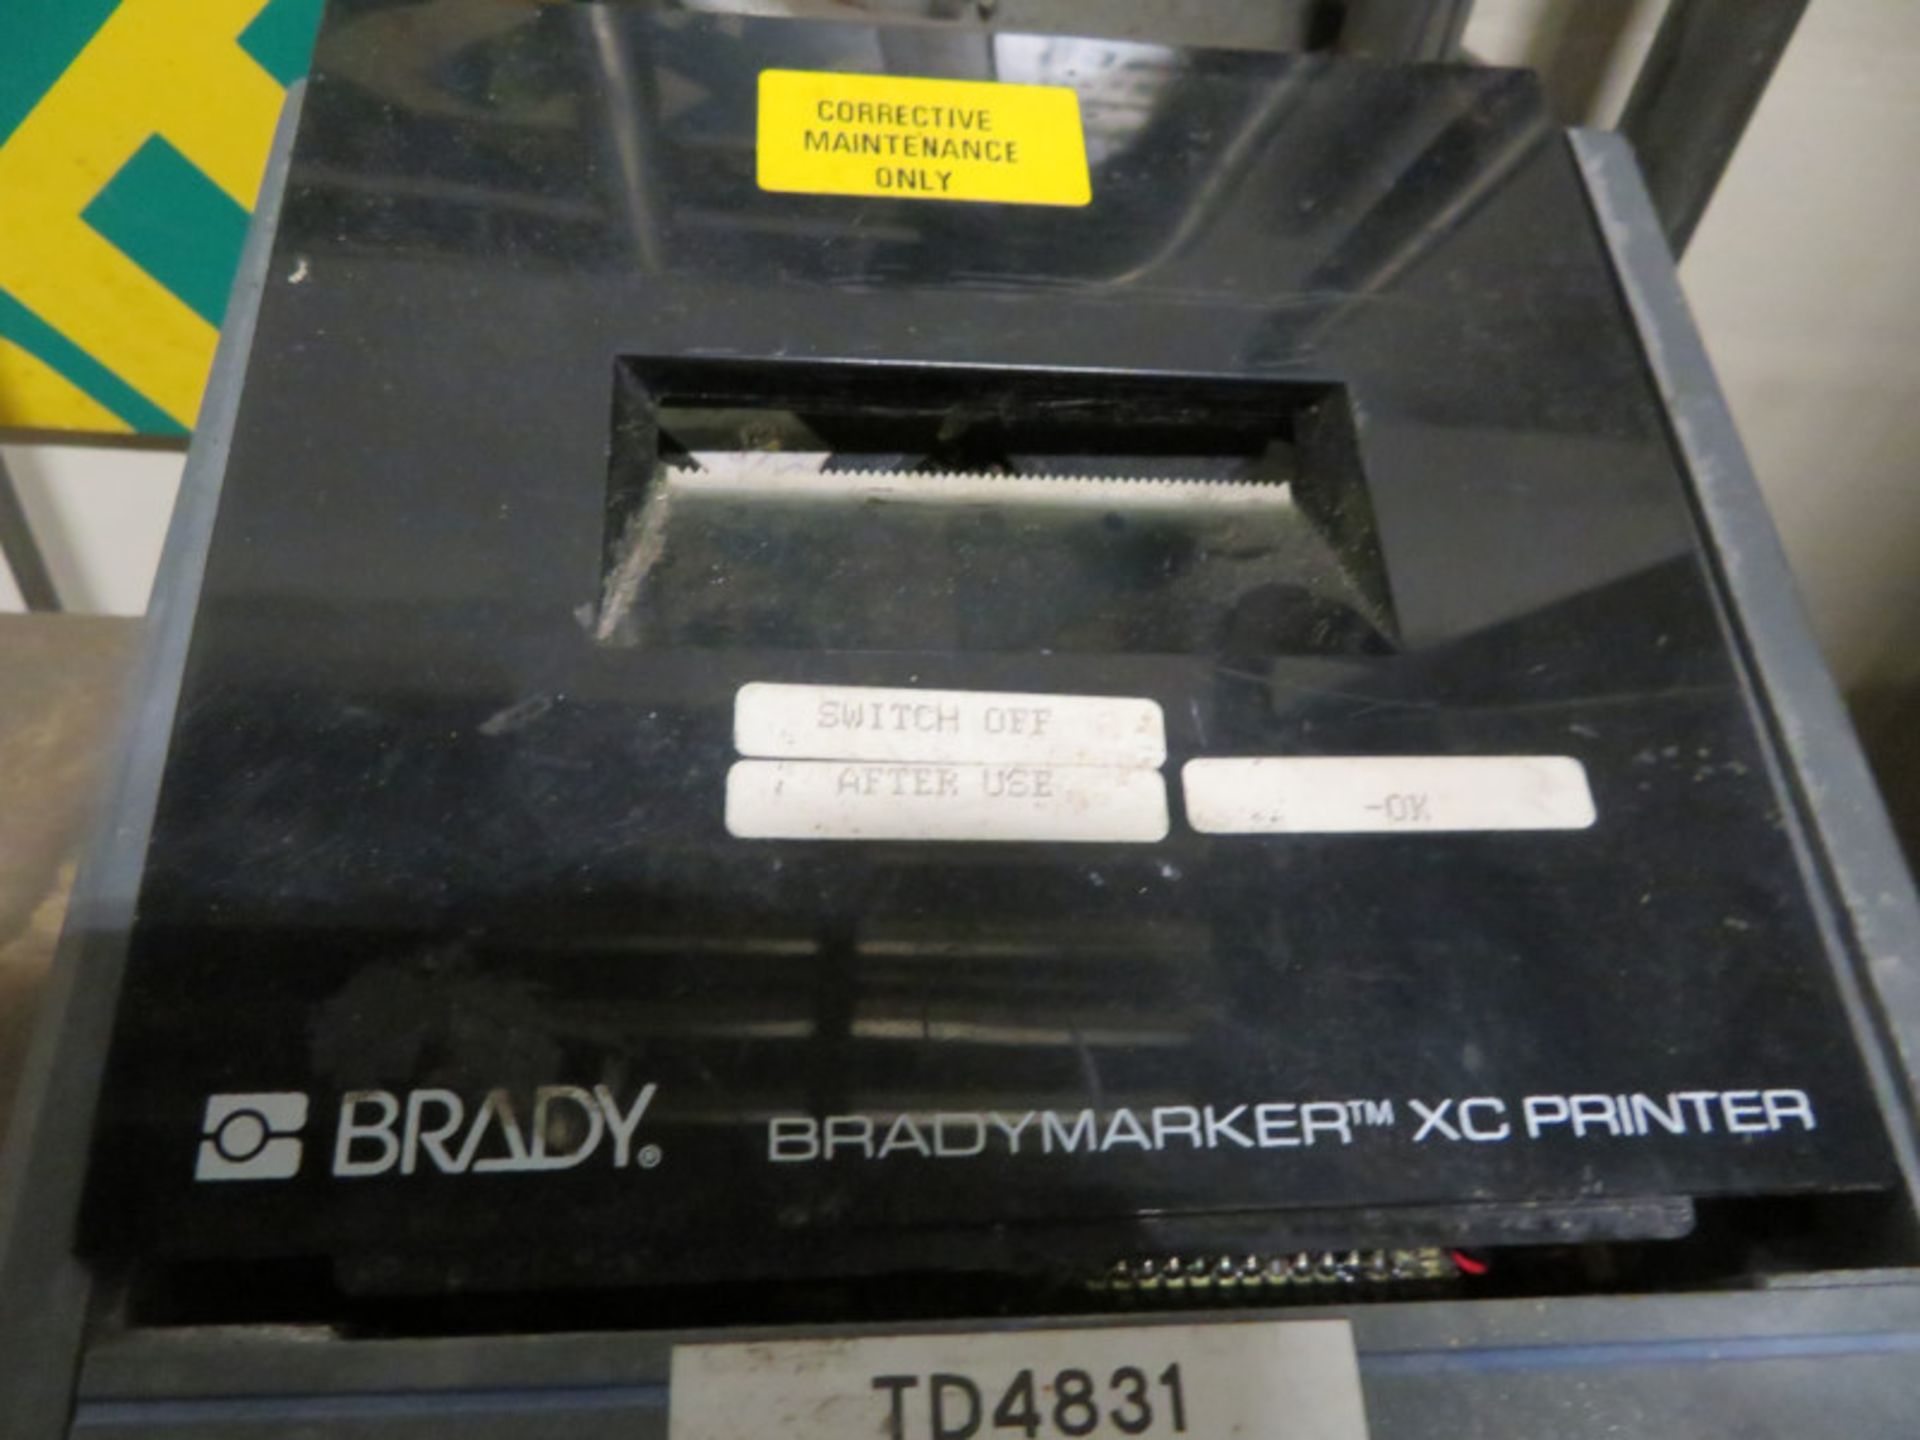 Brady Bradymarker XC Printer - Image 2 of 3